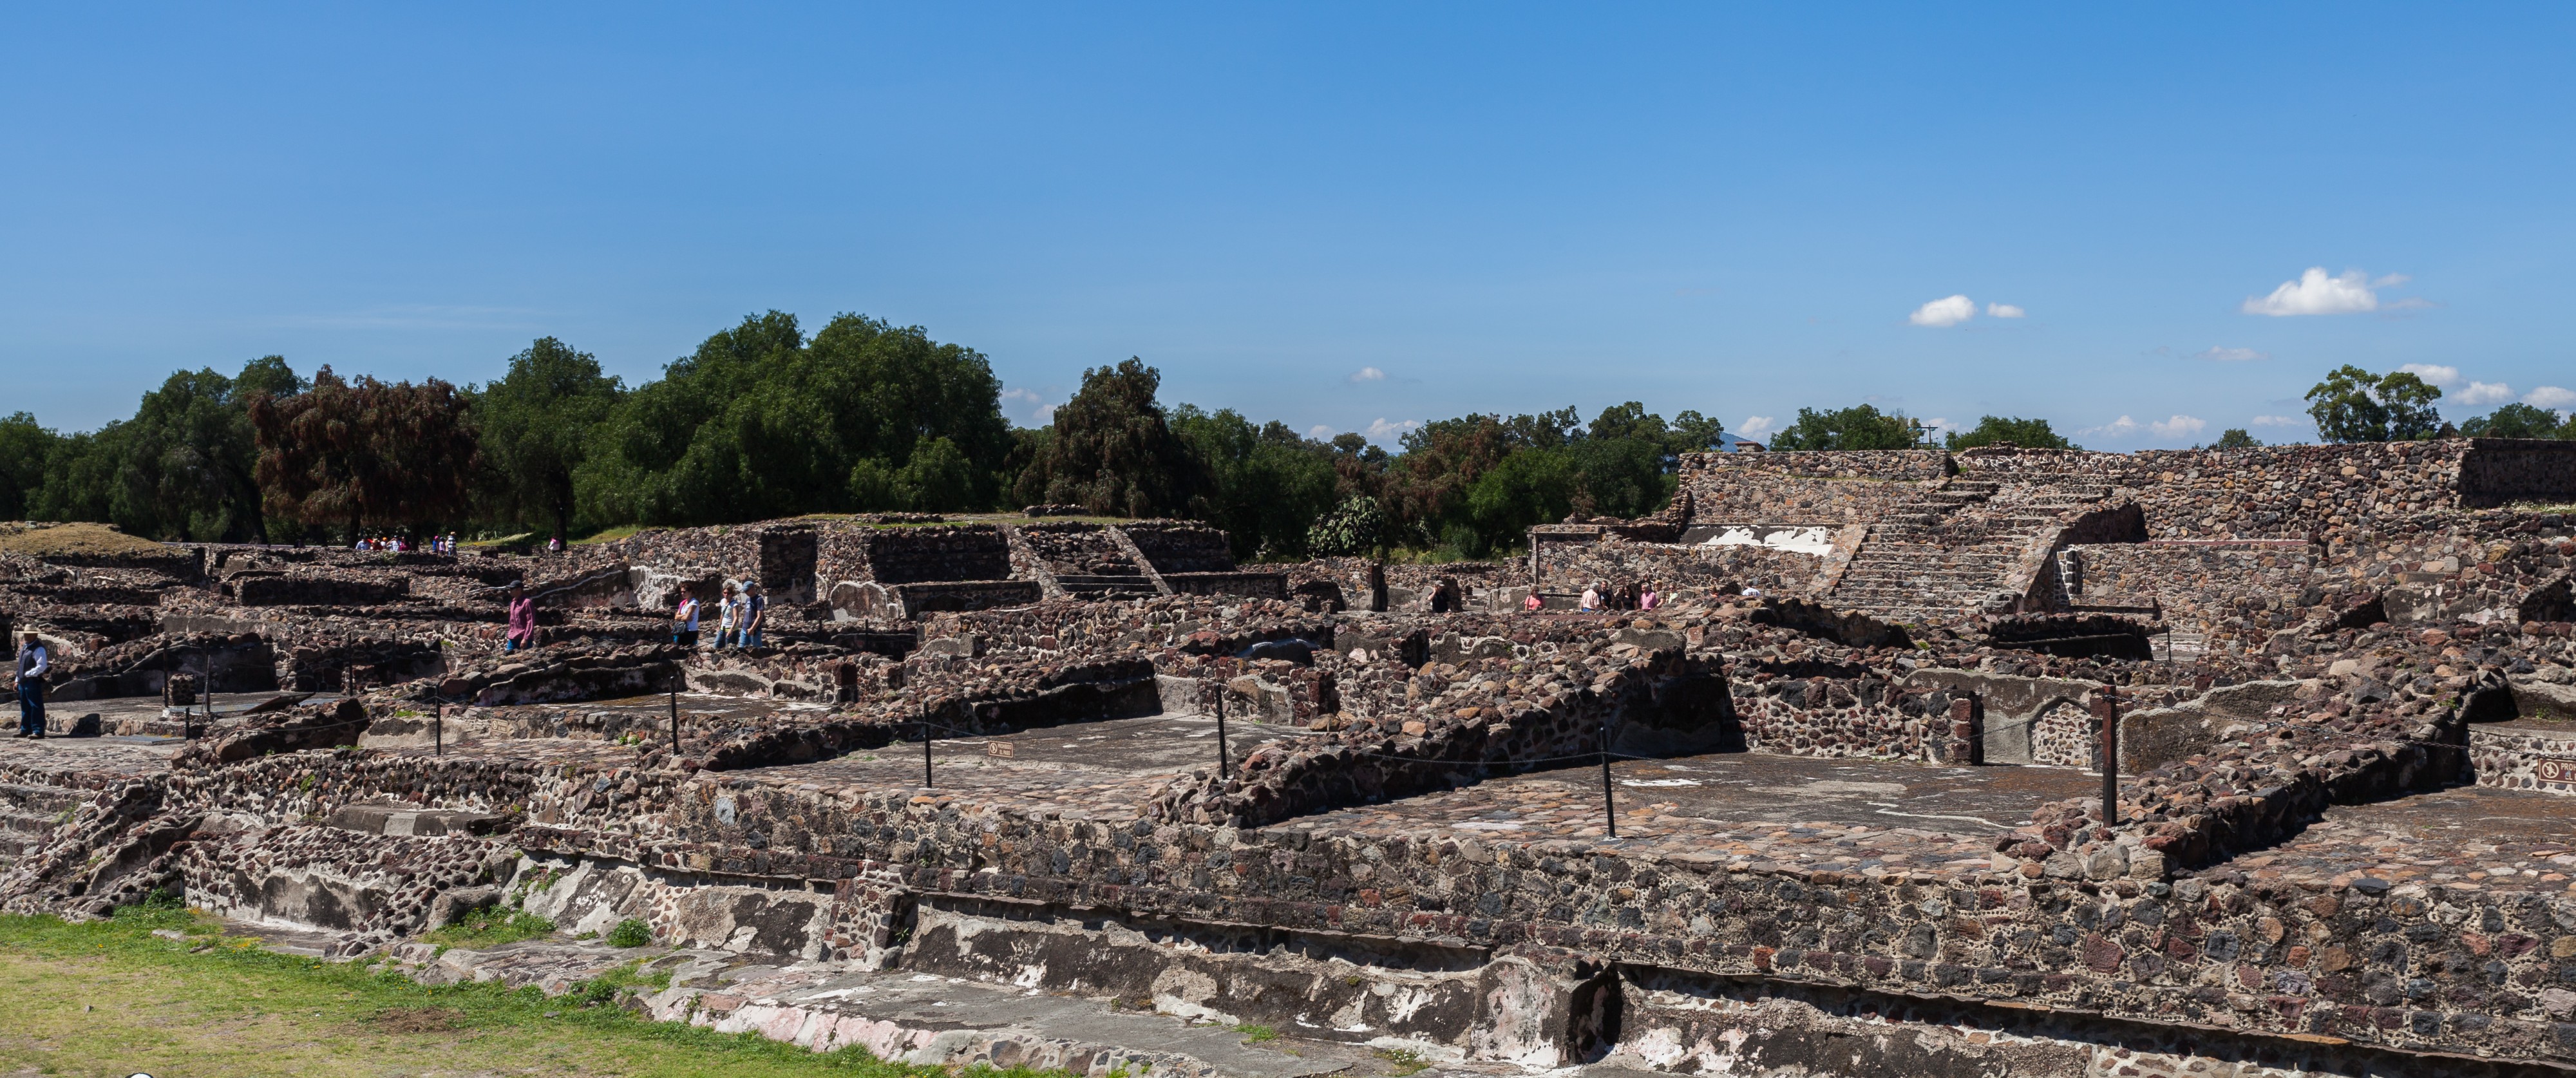 Teotihuacán, México, 2013-10-13, DD 70